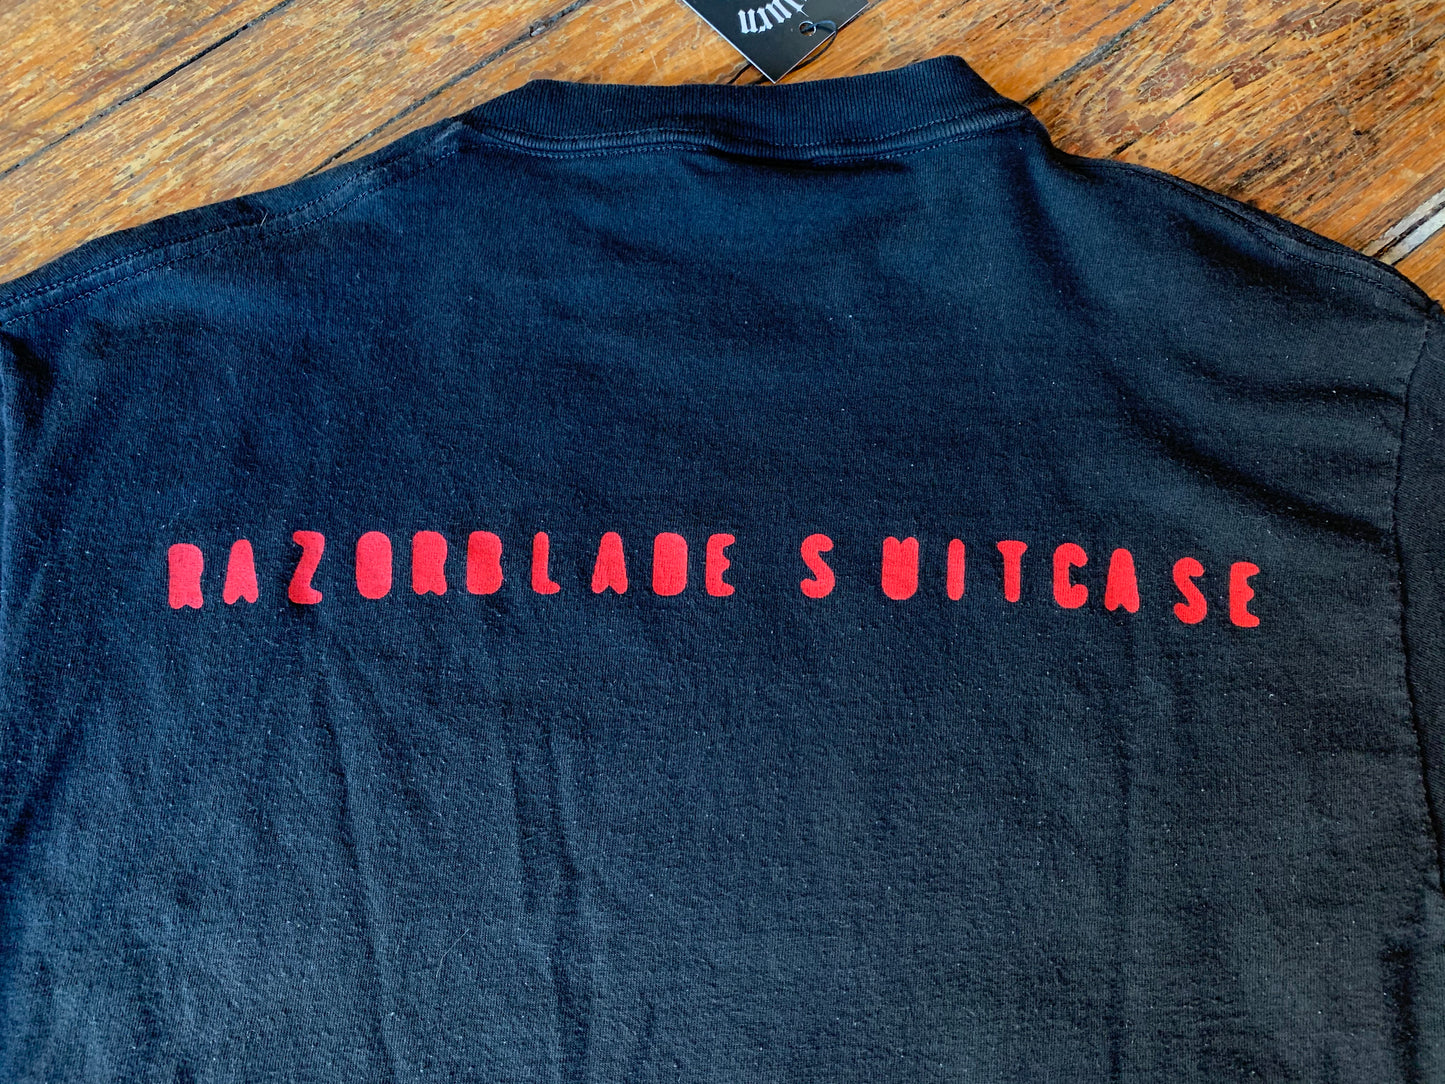 Vintage 1996 Bush Razorblade Suitcase T-Shirt